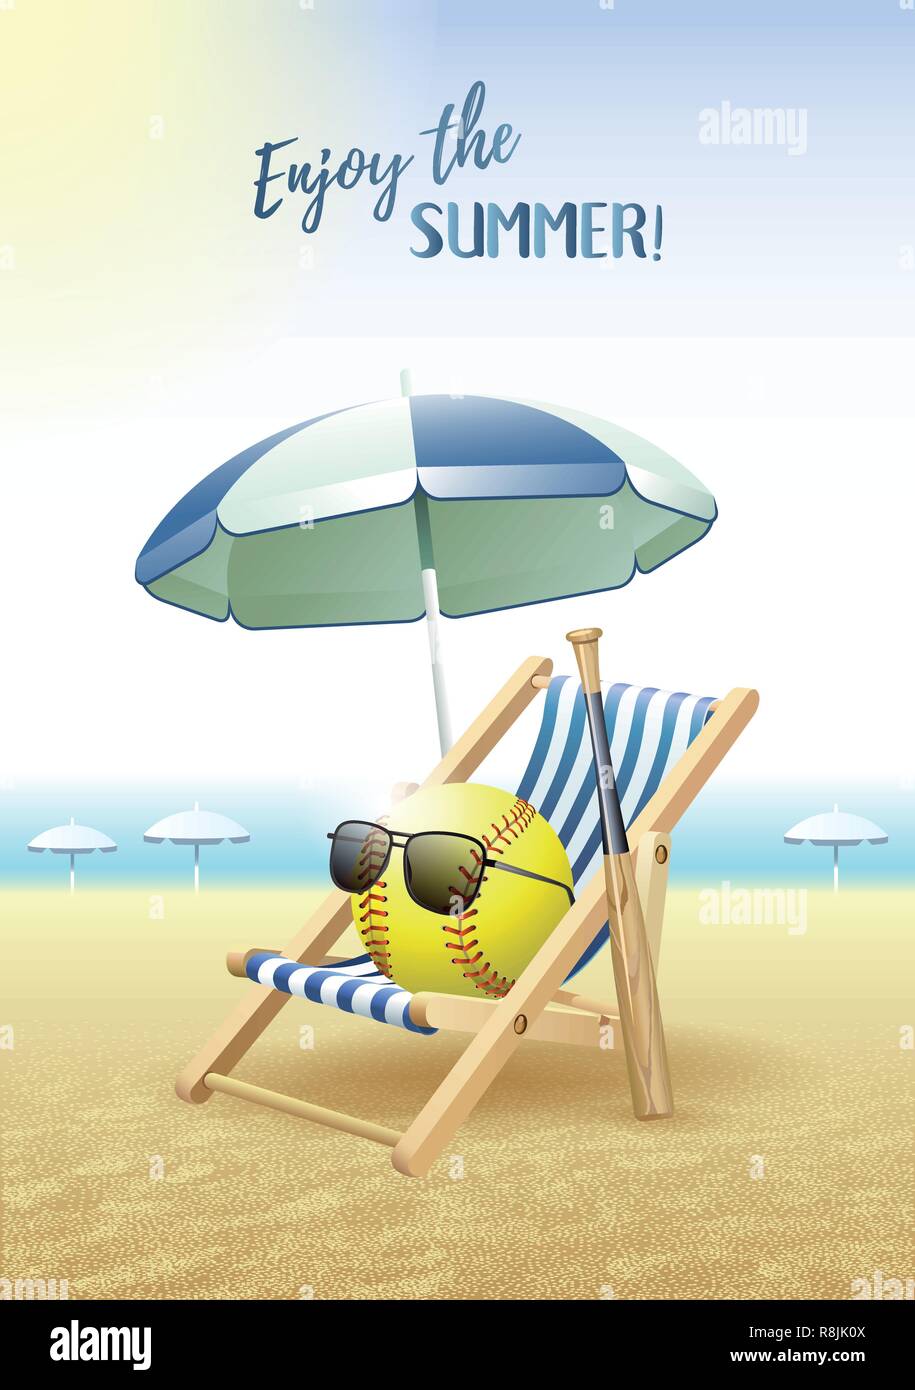 Enjoy the Summer! Sports card. Softball ball with sunglasses, beach umbrella, deck chair and wooden bat on the sand beach. Vector illustration. Stock Vector